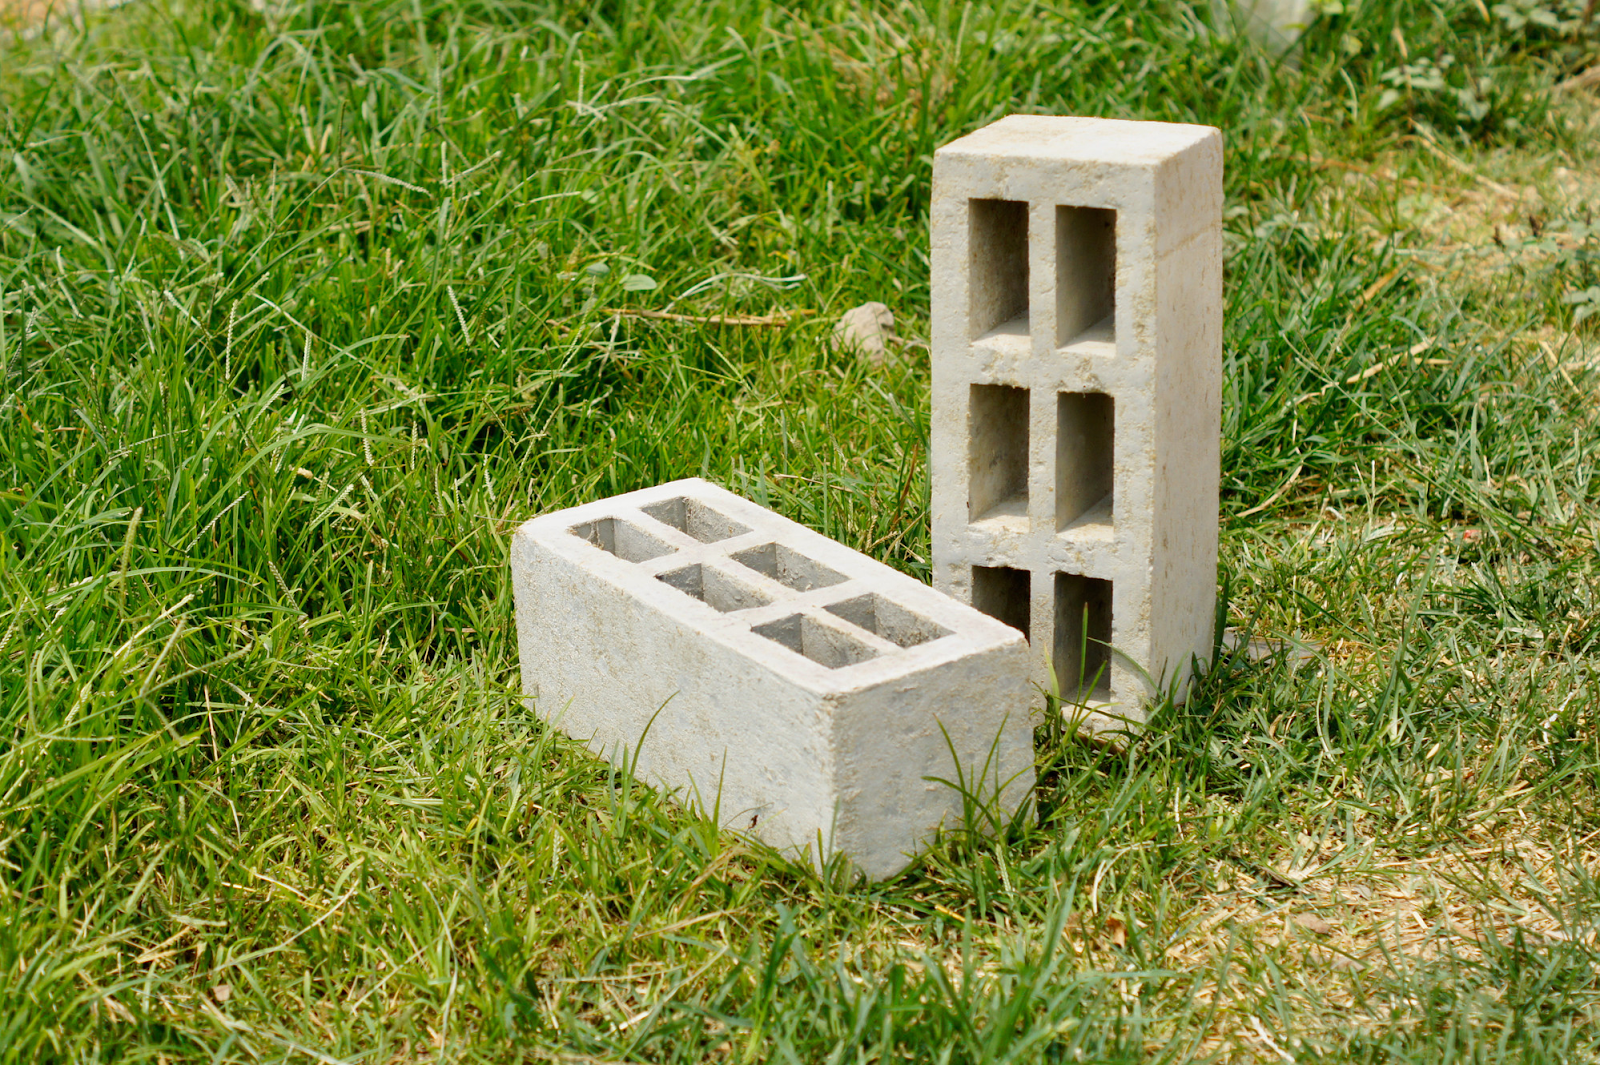 Hollow cement blocks on grass